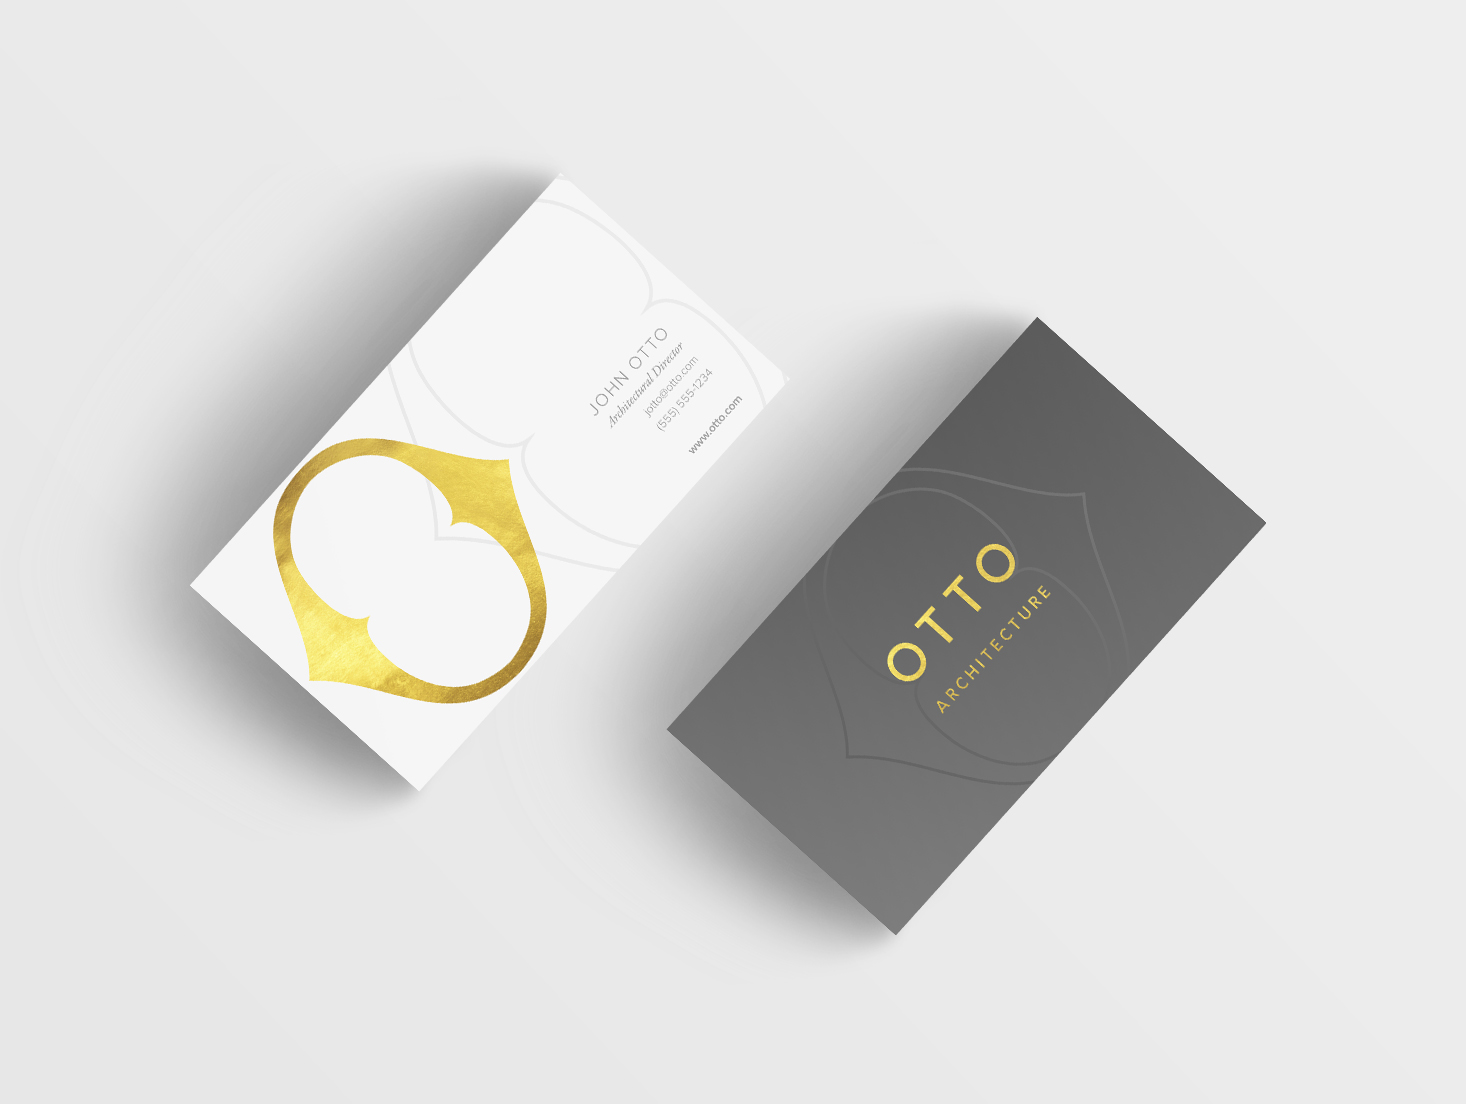 Otto Business Card.jpg